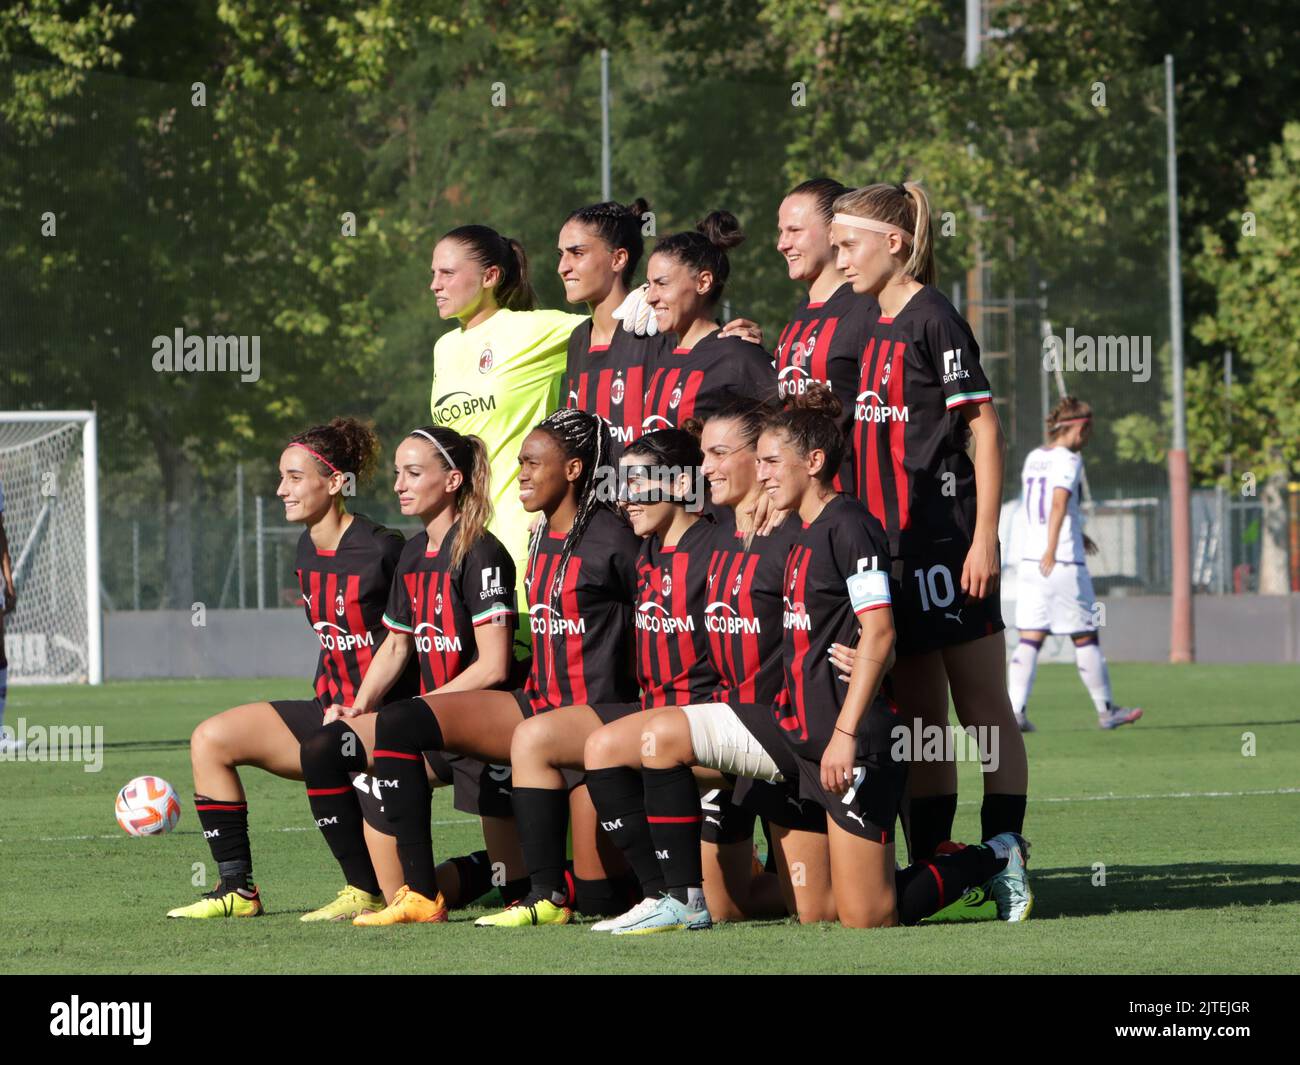 Yui Hasegawa (AC Milan) during AC Milan vs ACF Fiorentina femminile,  Italian football Serie A Women match, - Photo .LiveMedia/Francesco  Scaccianoce Stock Photo - Alamy